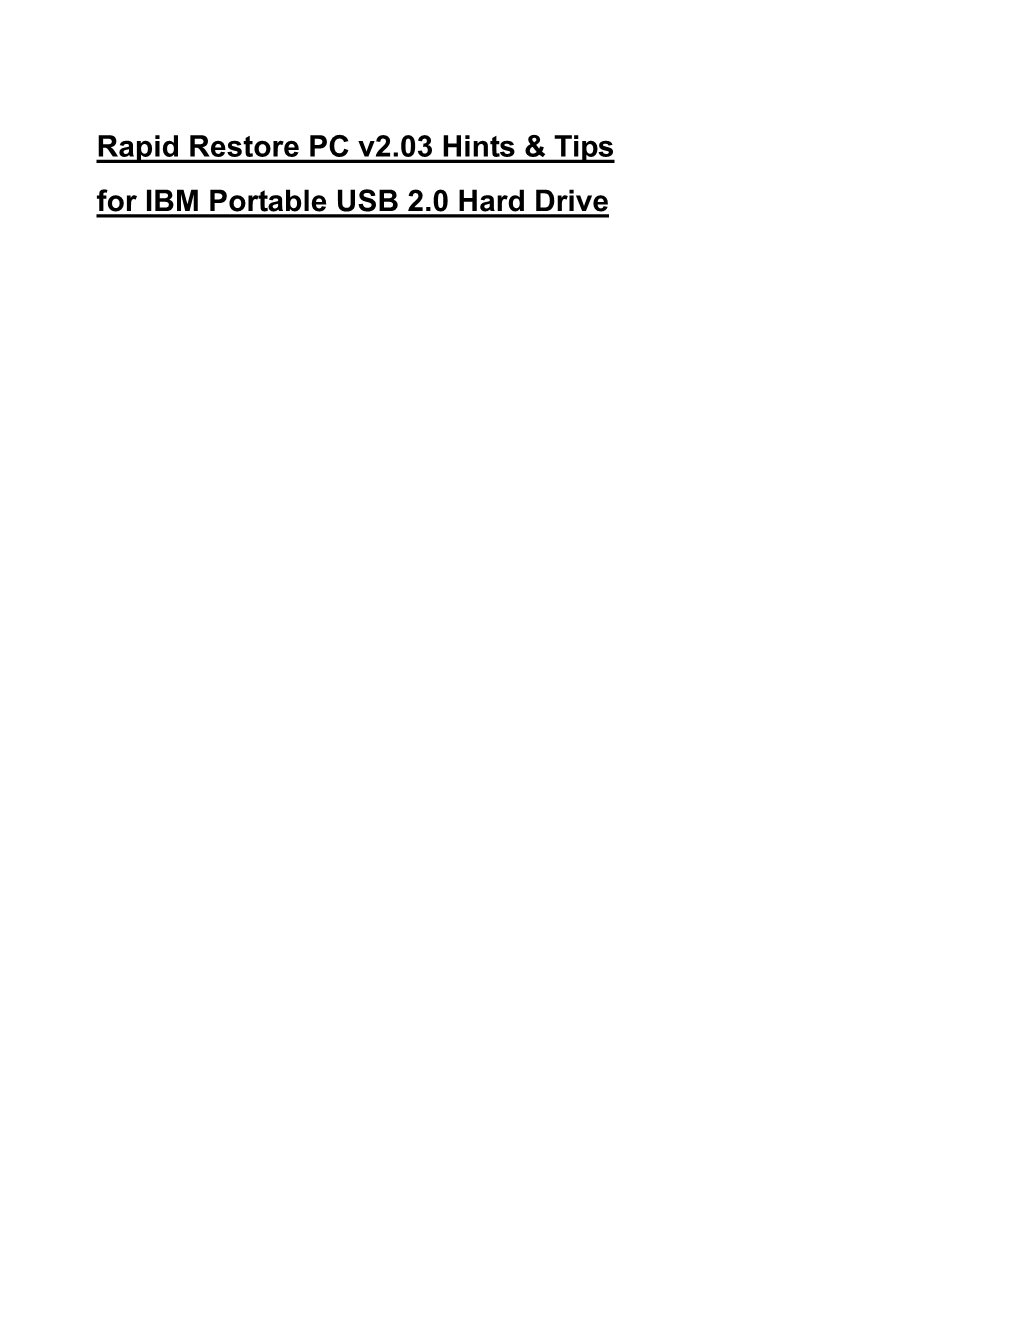 Rapid Restore PC V2.03 Hints & Tips for IBM Portable USB 2.0 Hard Drive